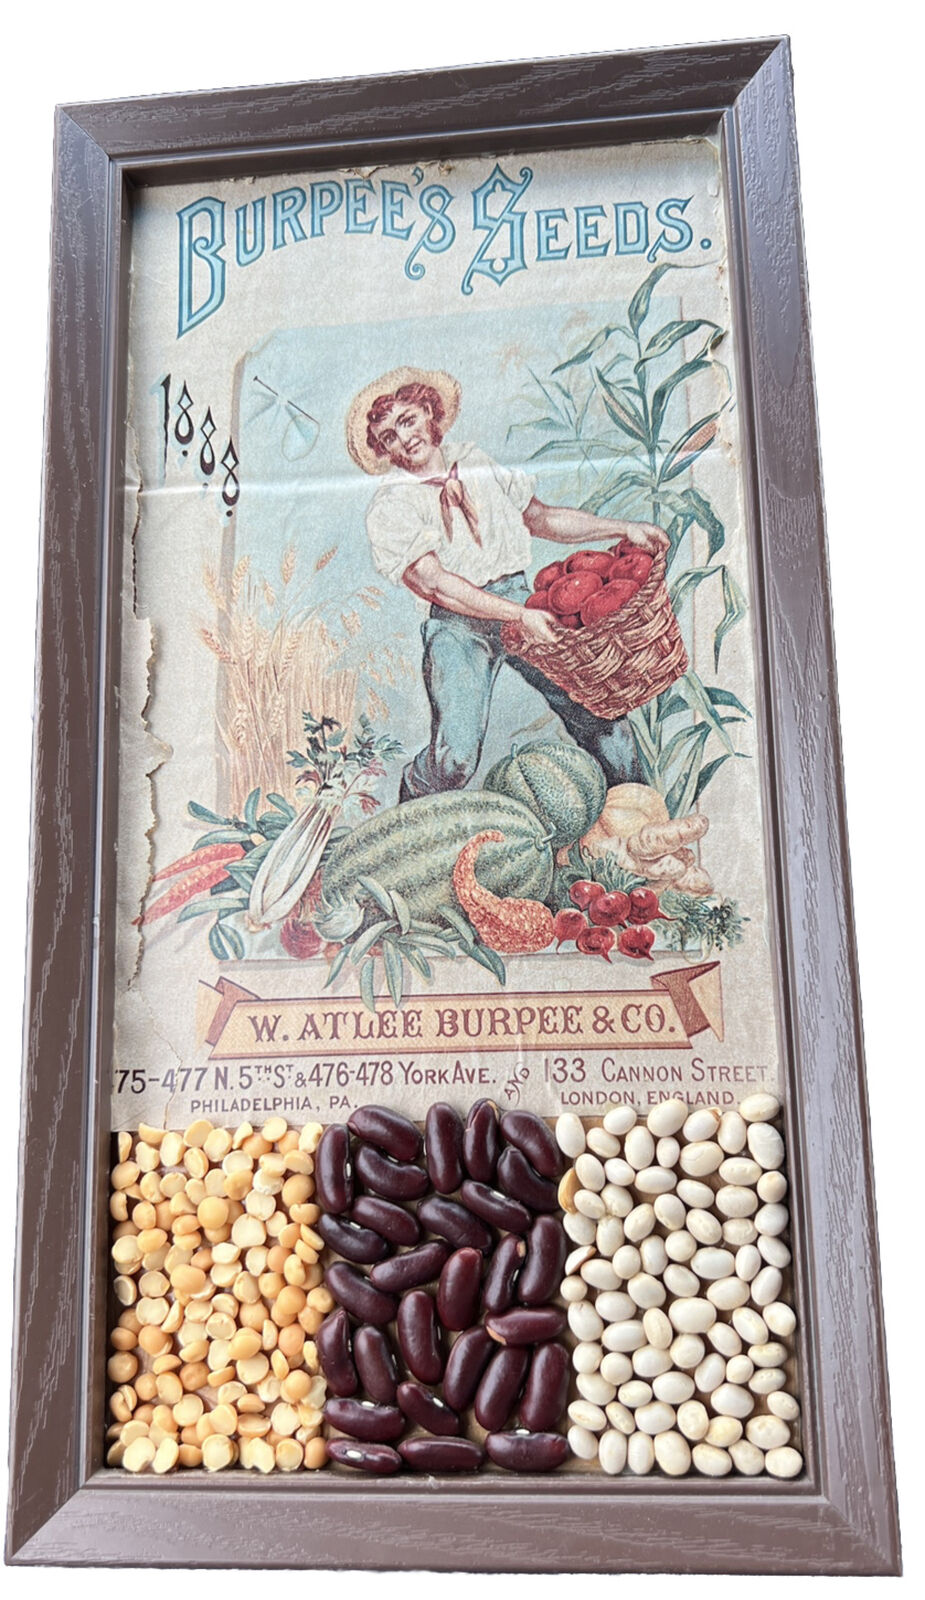 1888 Ad W. ATLEE BURPEE CO. PHIL., PA. BURPEE’S SEEDS Rare Has Real Seeds